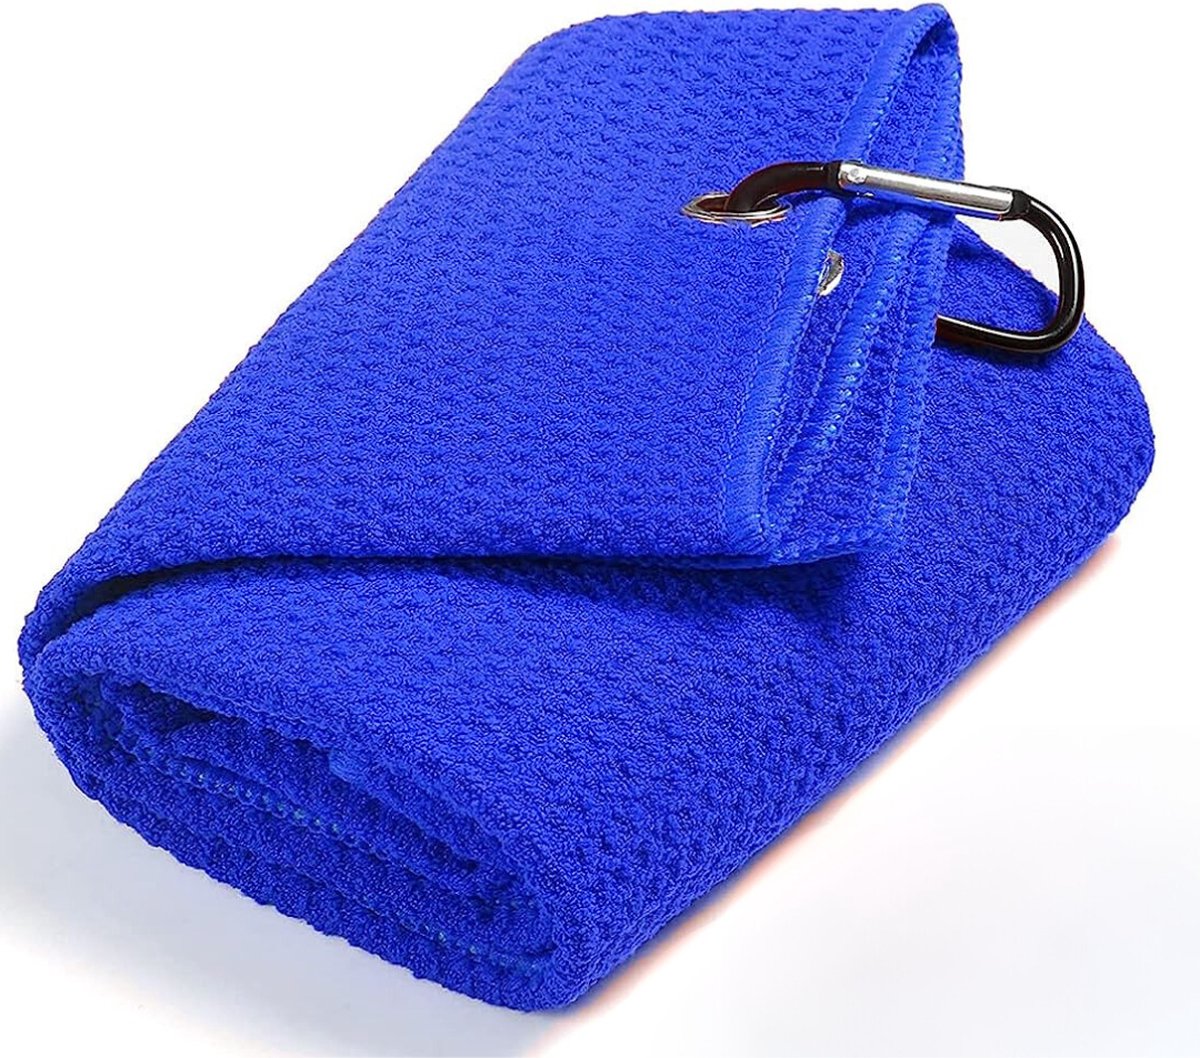 Microfiber Golf handdoek - Plus handige haak - Blauw - Snel drogend - 30cm x 50cm - Golfaccesoires - Golftas/trolley - Microfiber